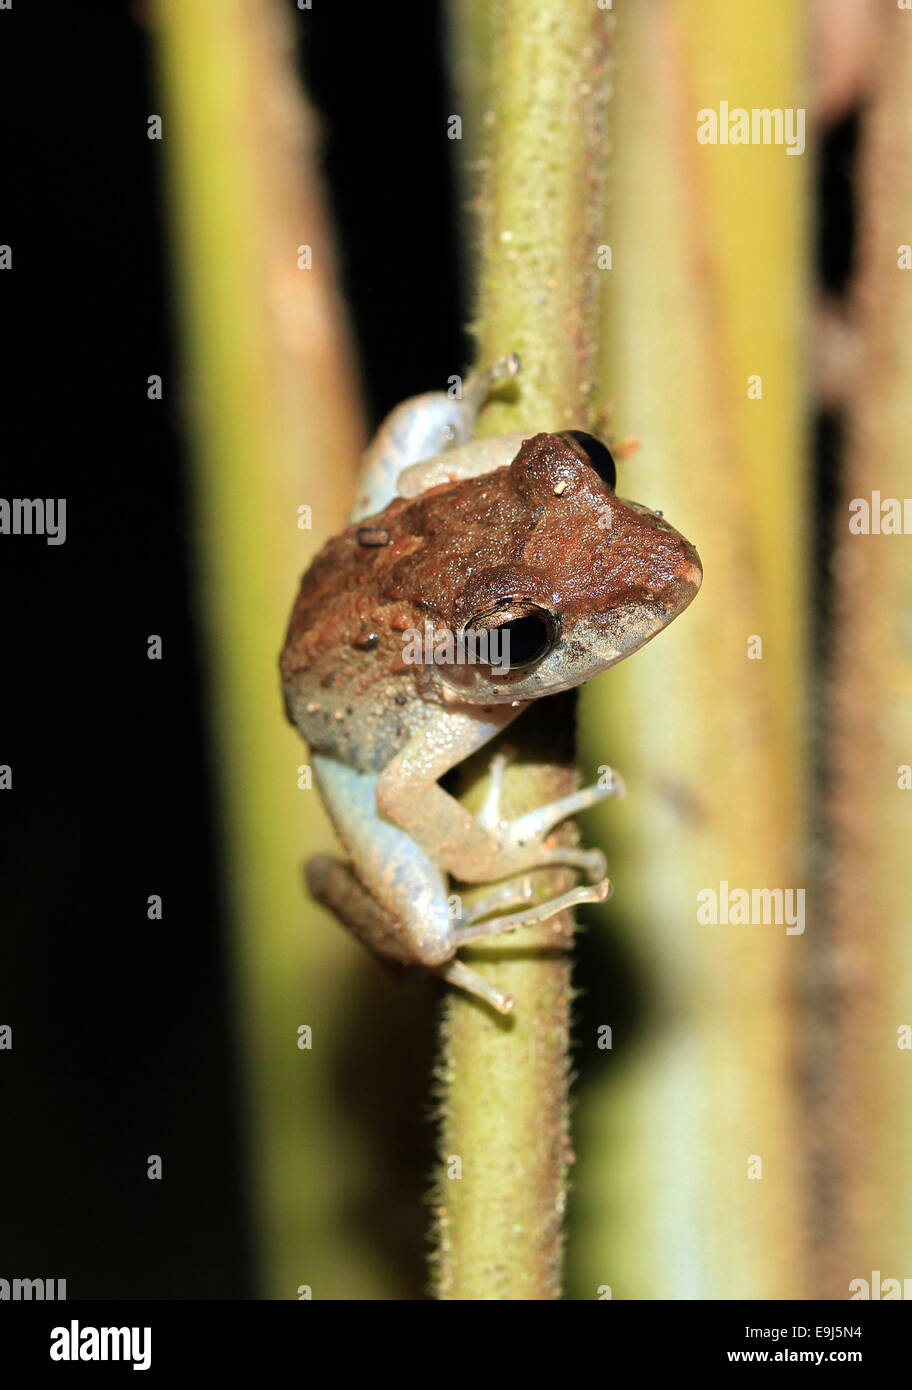 https://c8.alamy.com/comp/E9J5N4/small-unidentified-frog-on-a-straw-drake-bay-costa-rica-E9J5N4.jpg